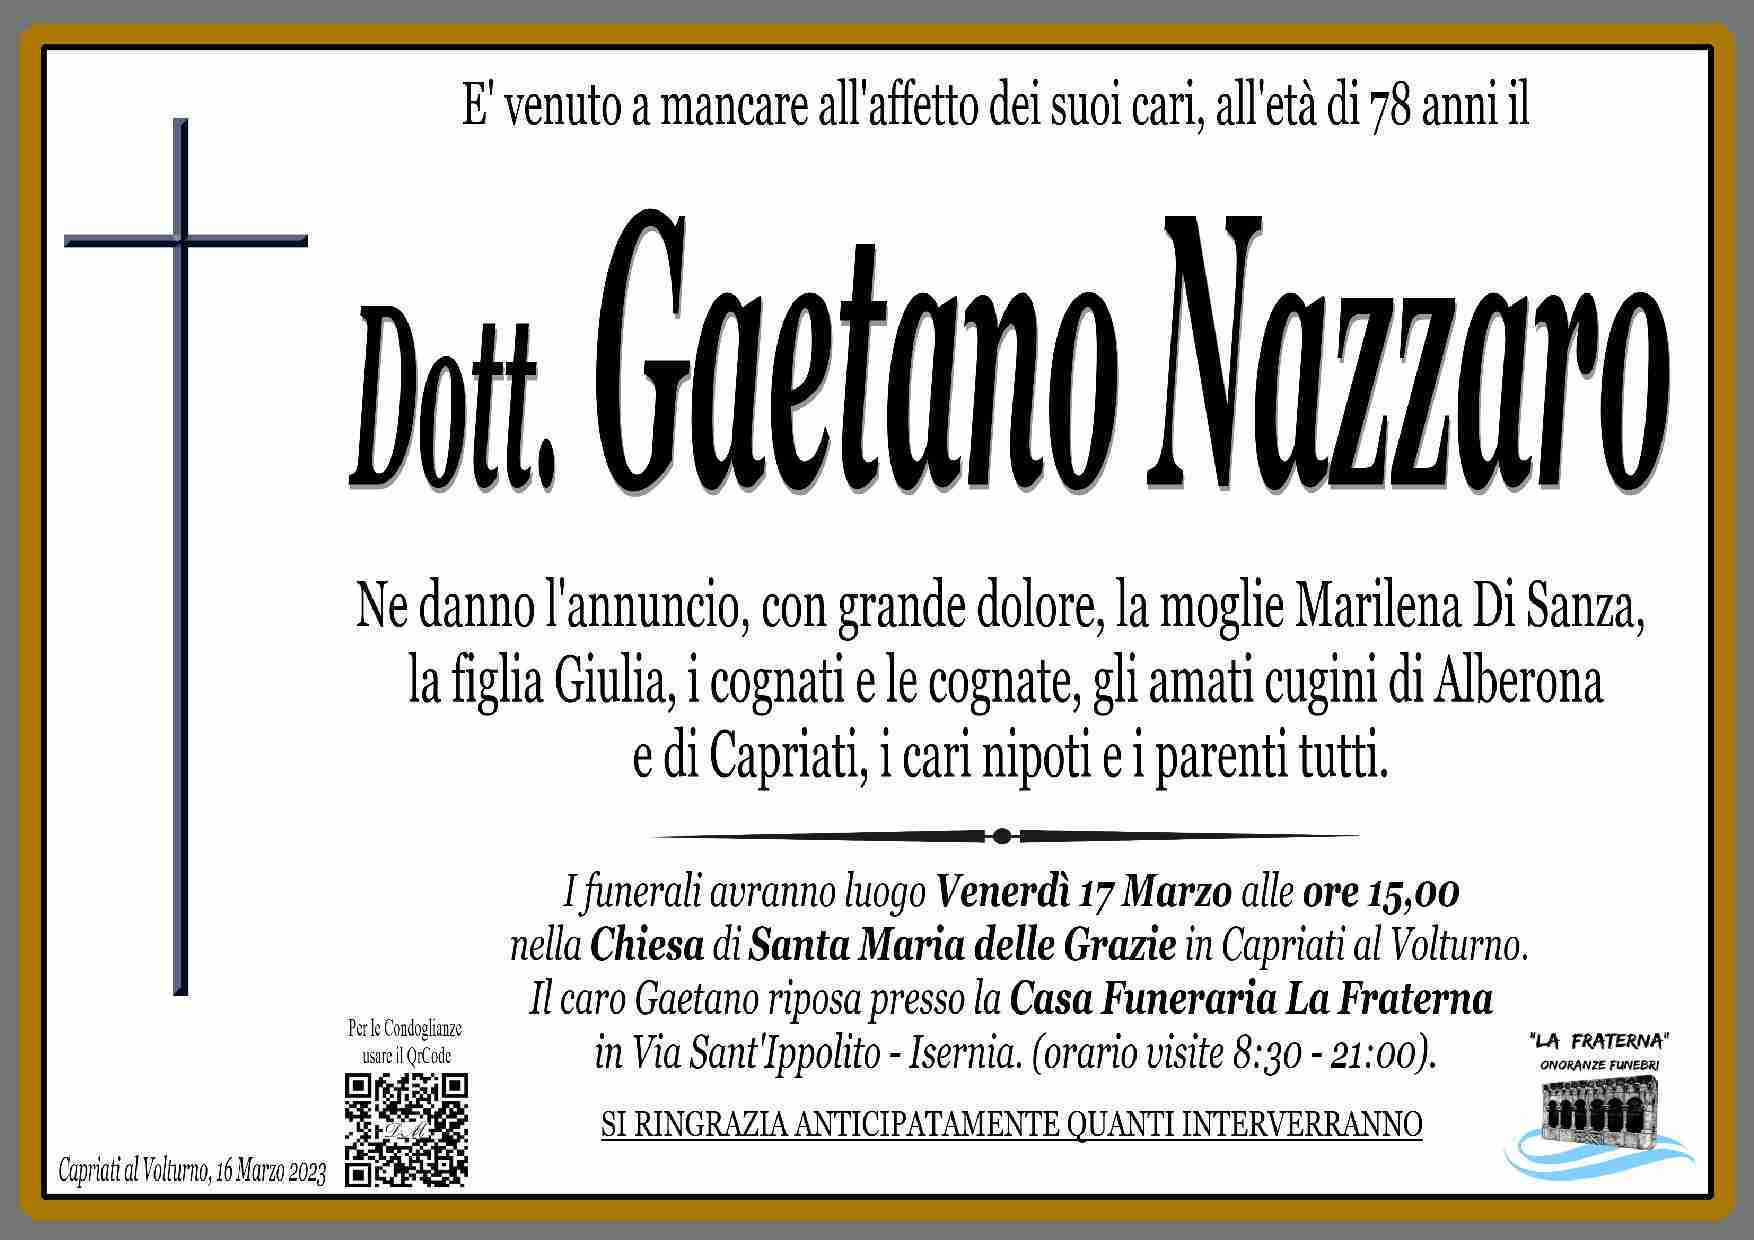 Gaetano Nazzaro